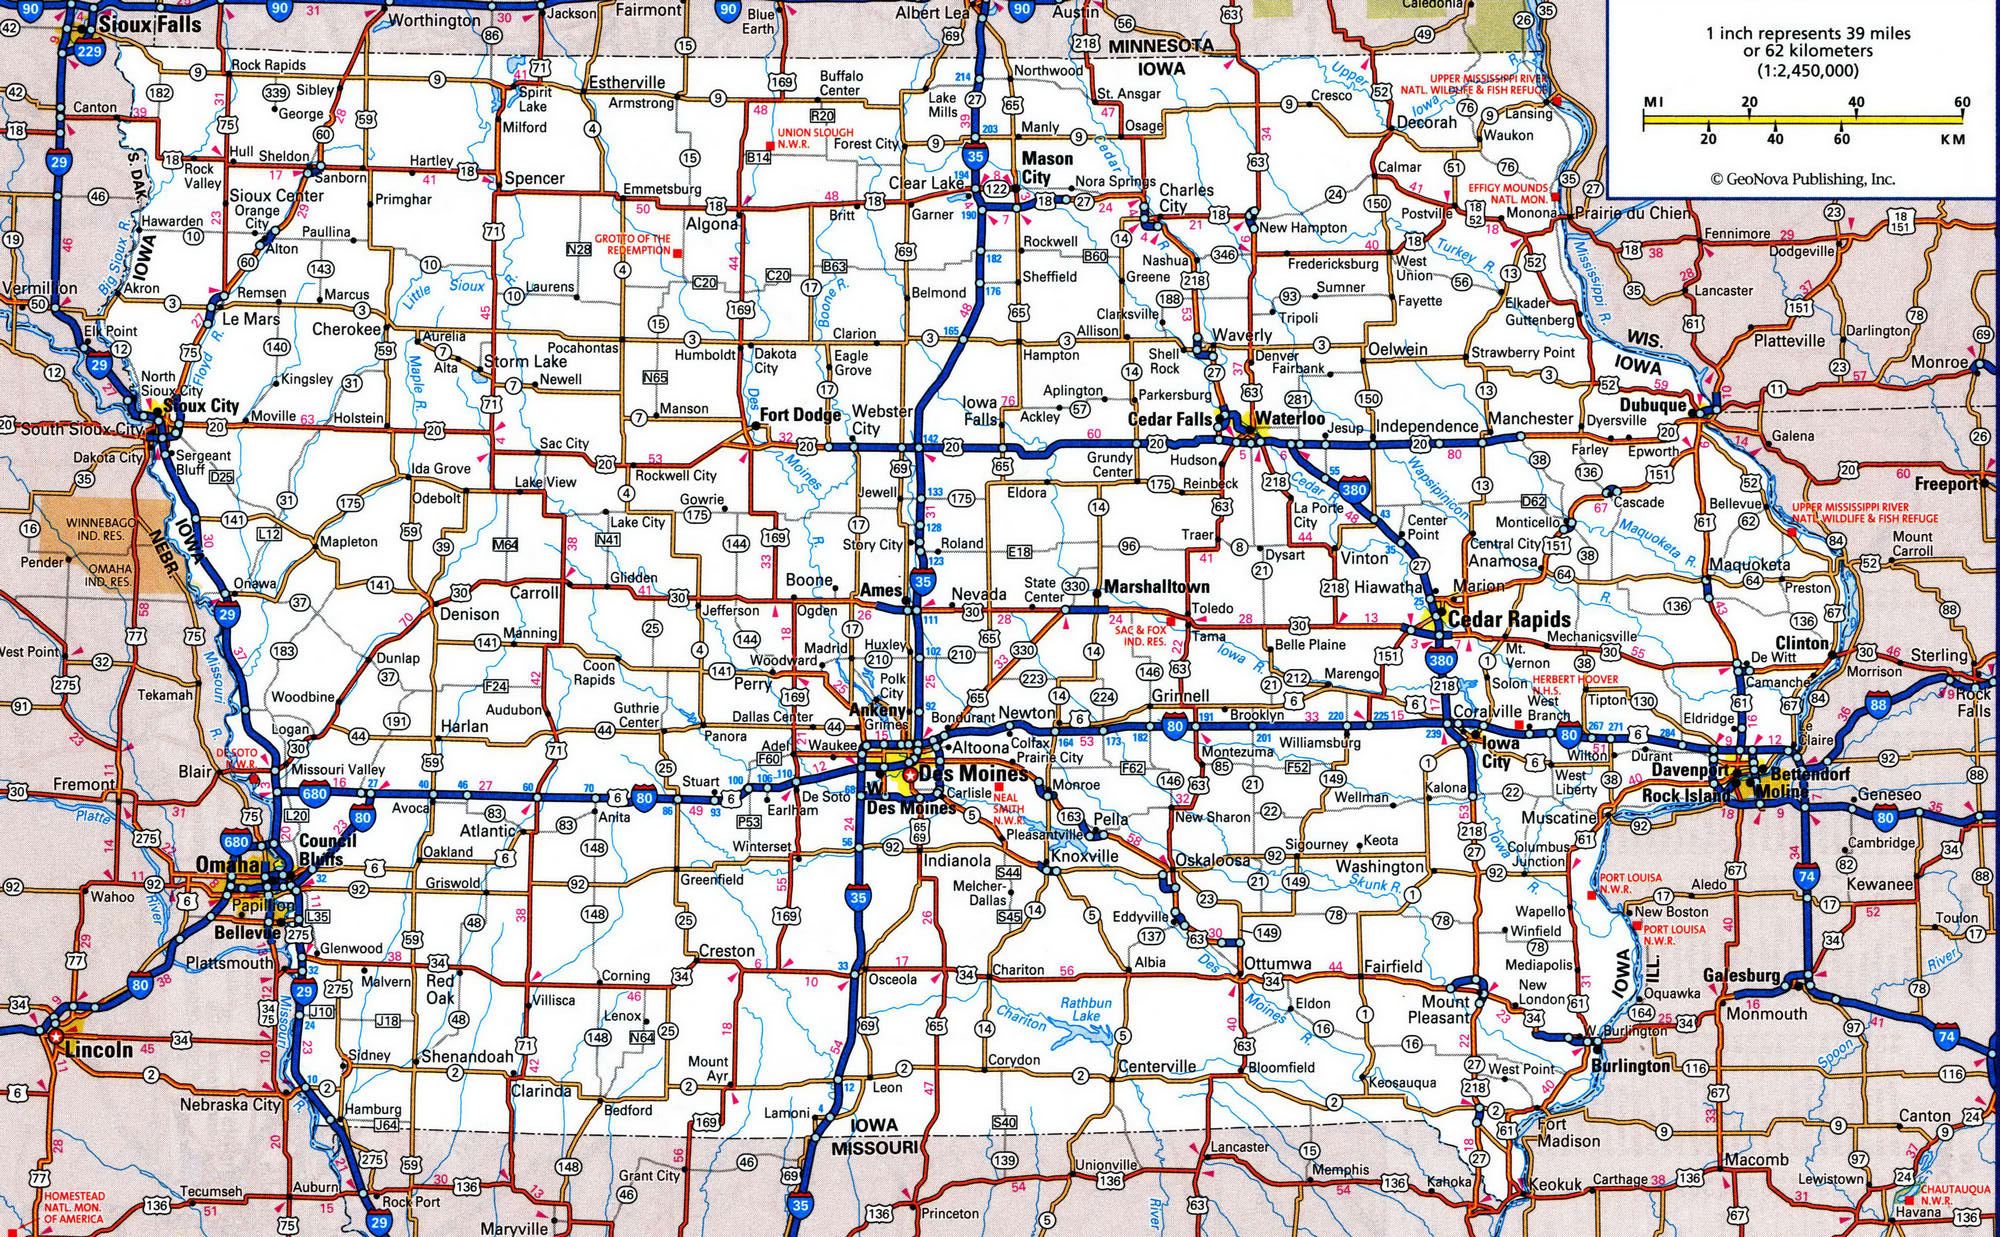 Detailed roads map of Iowa